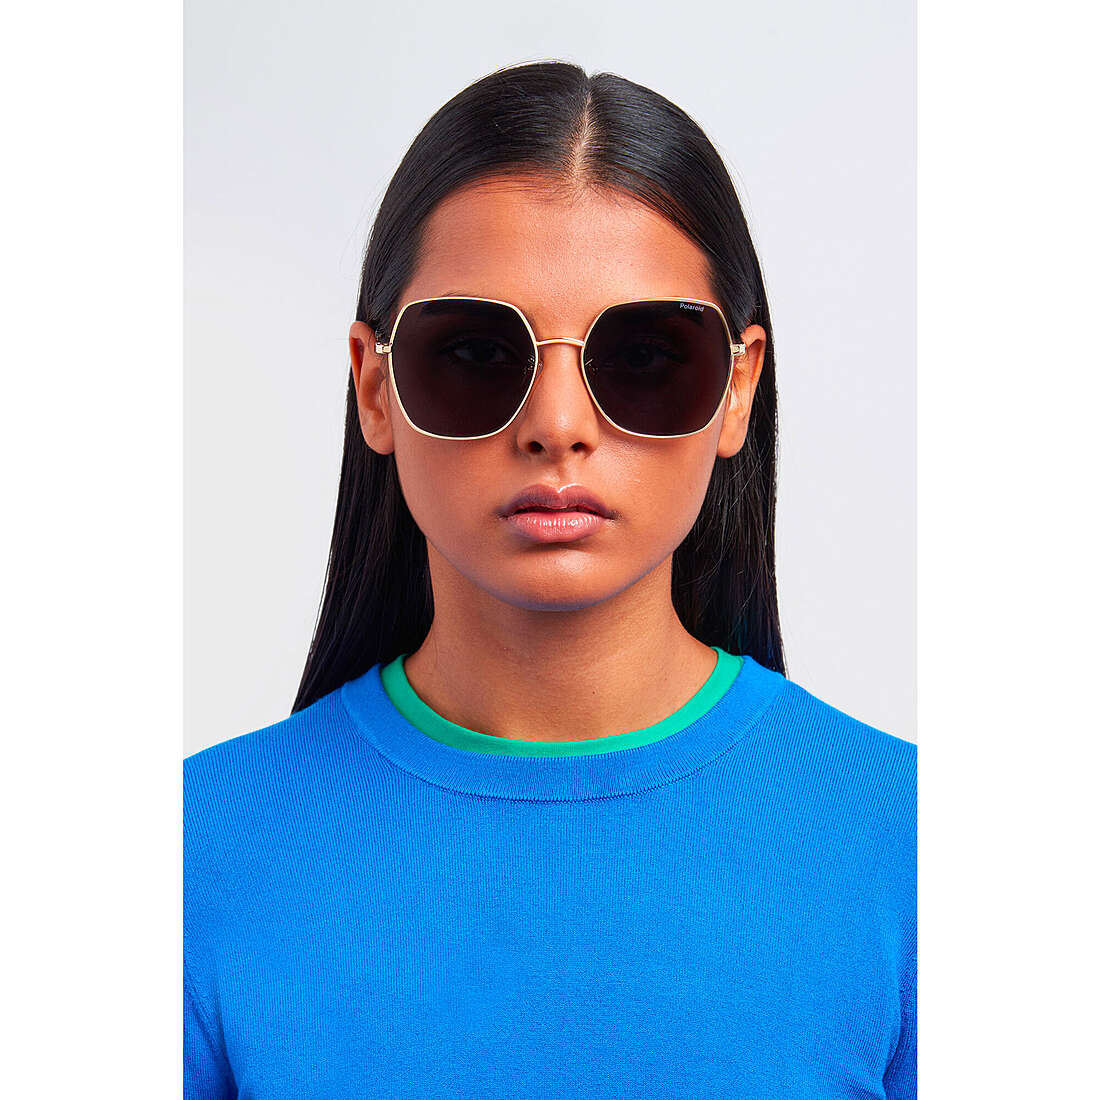 Polaroid occhiali da sole Cool donna 204844RHL58M9 indosso